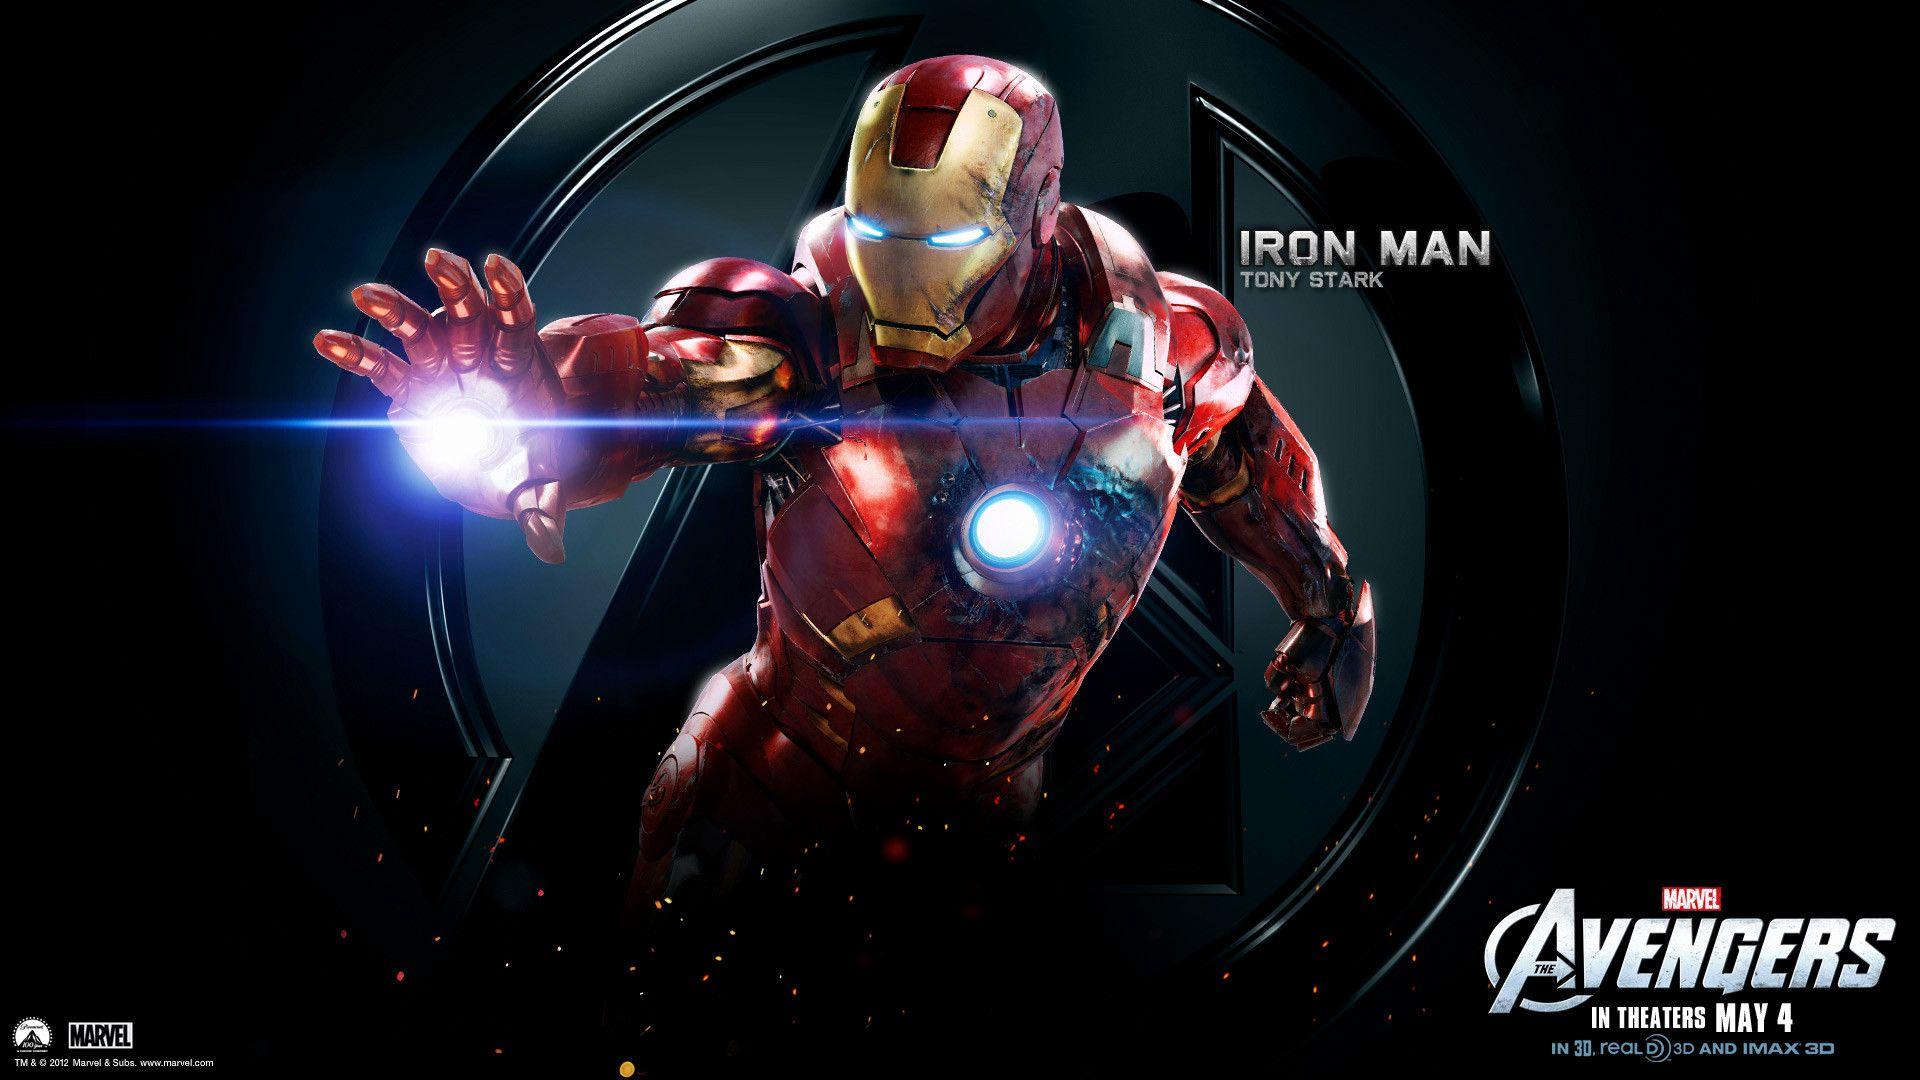 Iron Man Avengers Infinity War Wallpaper. How to Set Up New iPhone